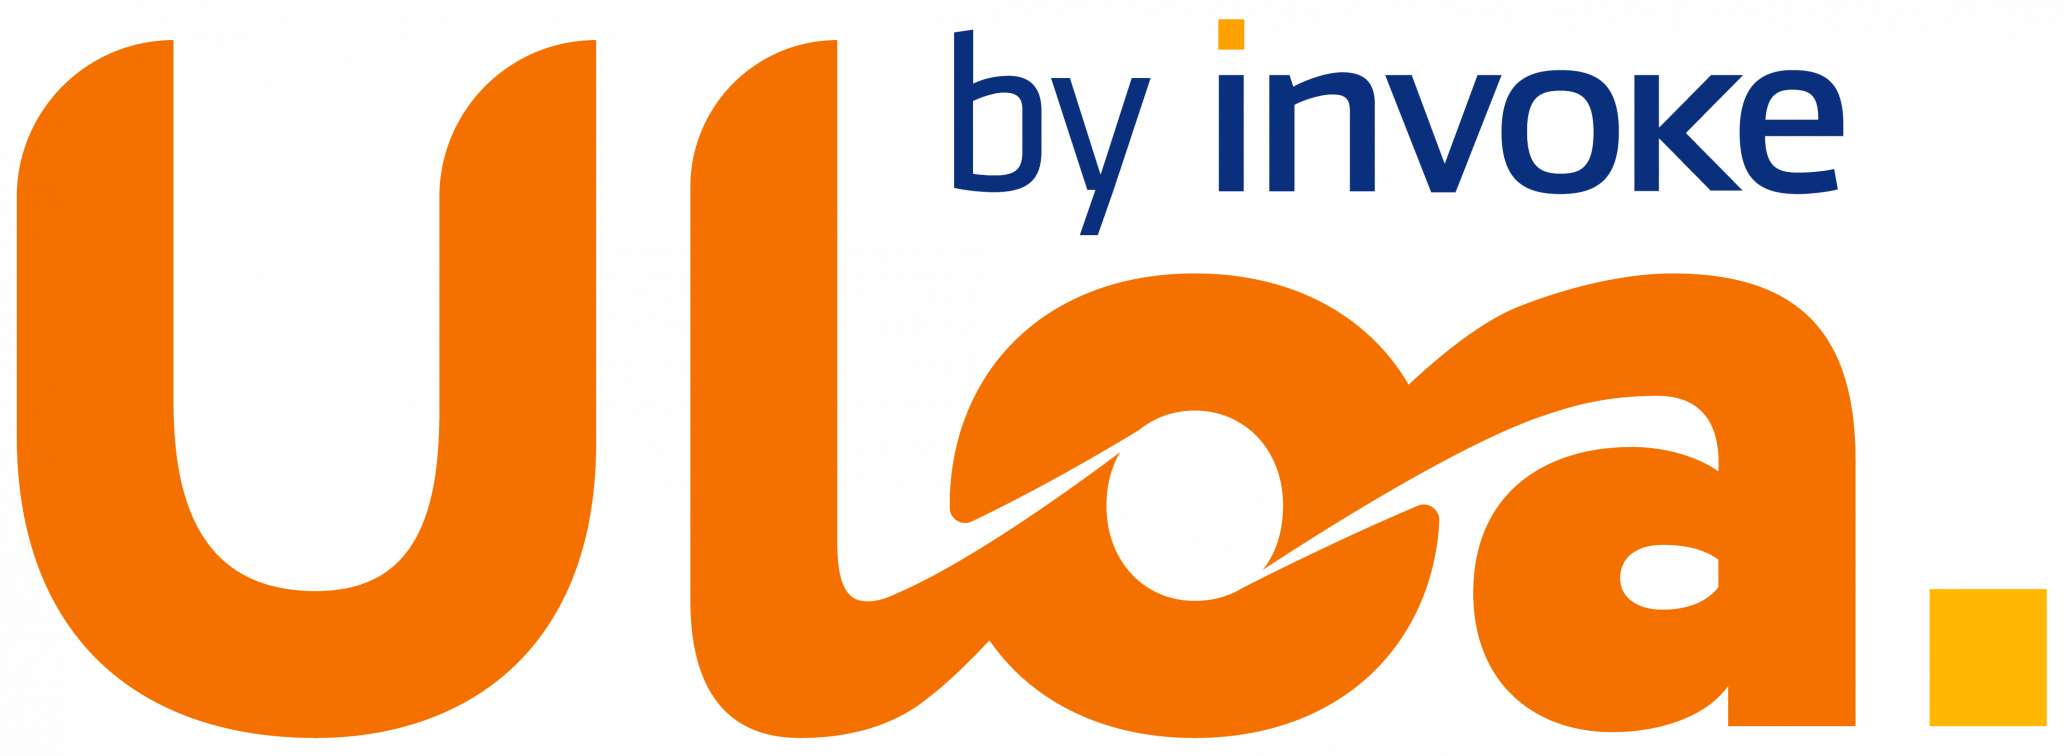 uloa logo by mercuria